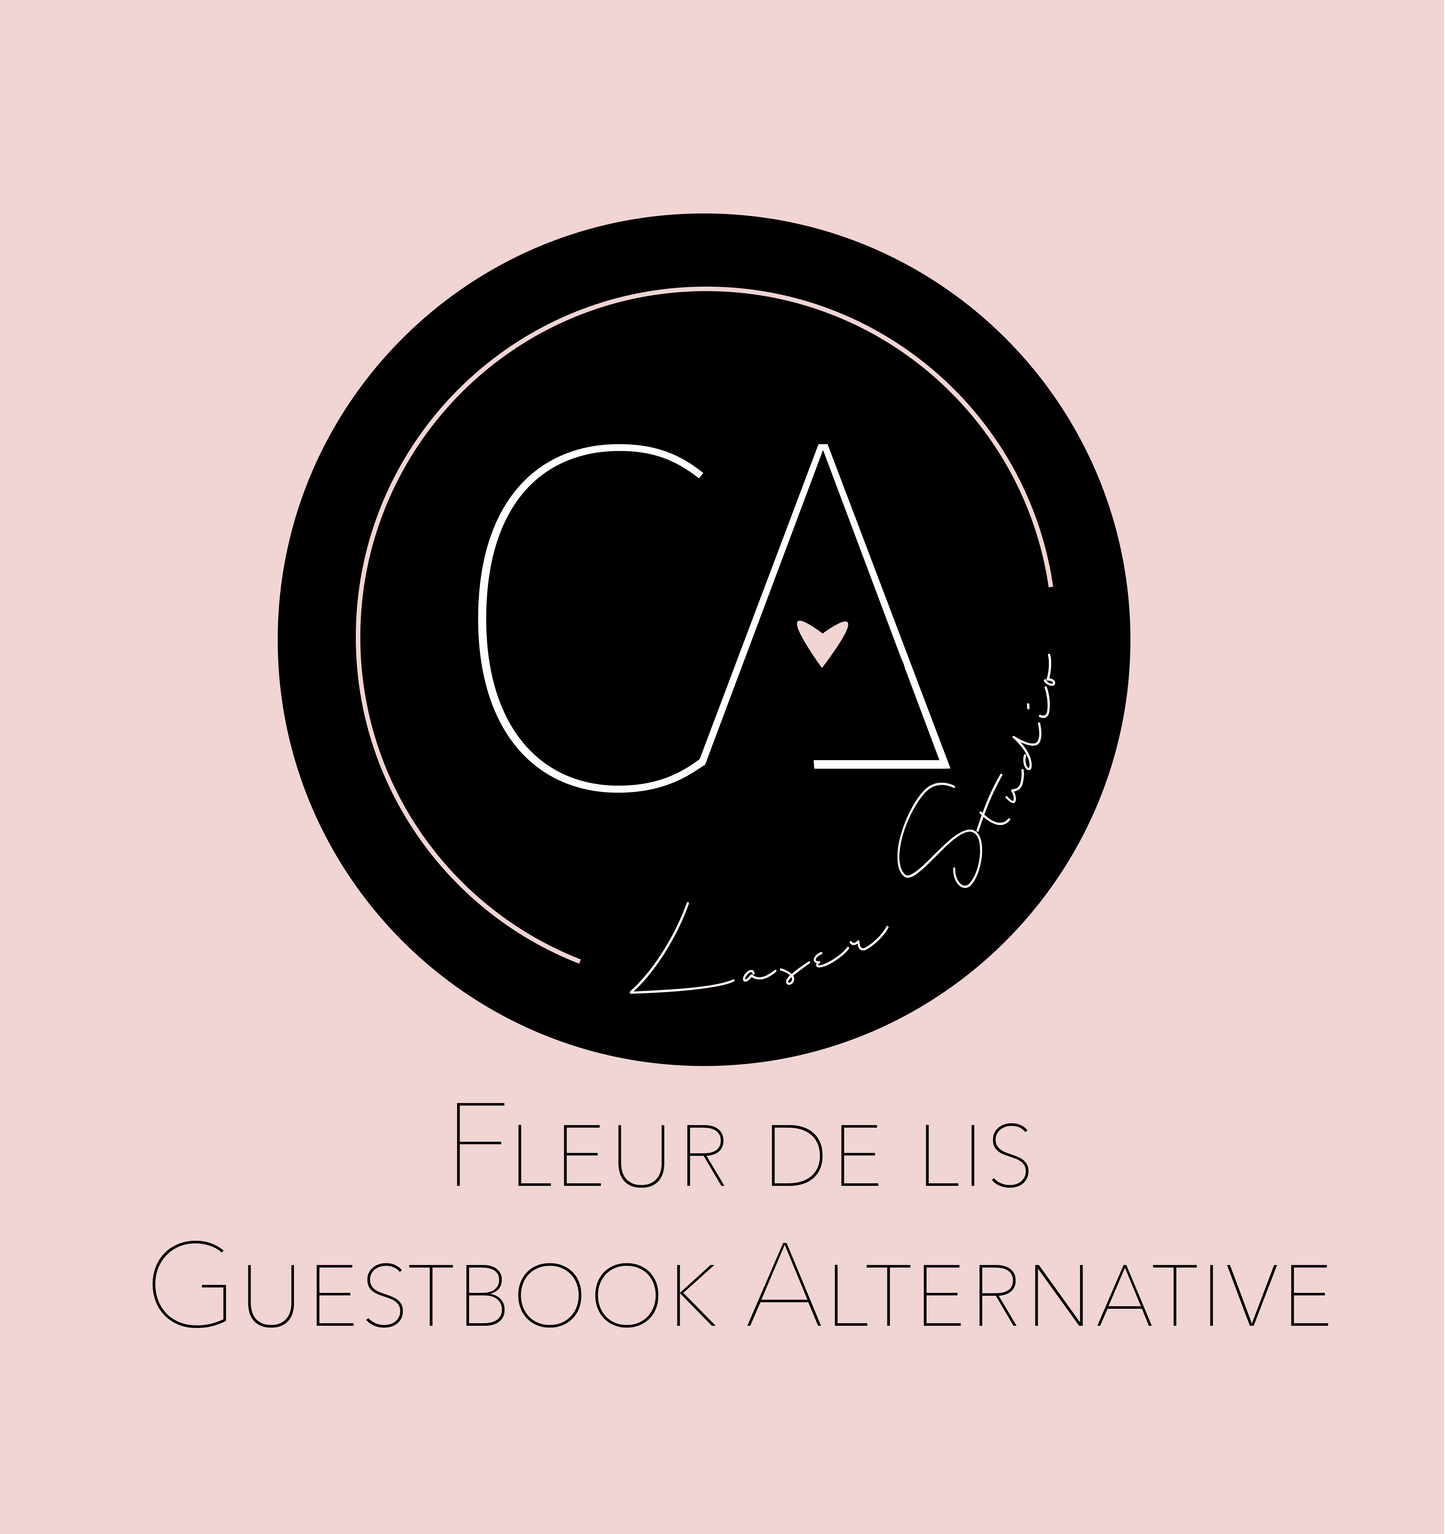 Fleur de lis Guestbook Alternative